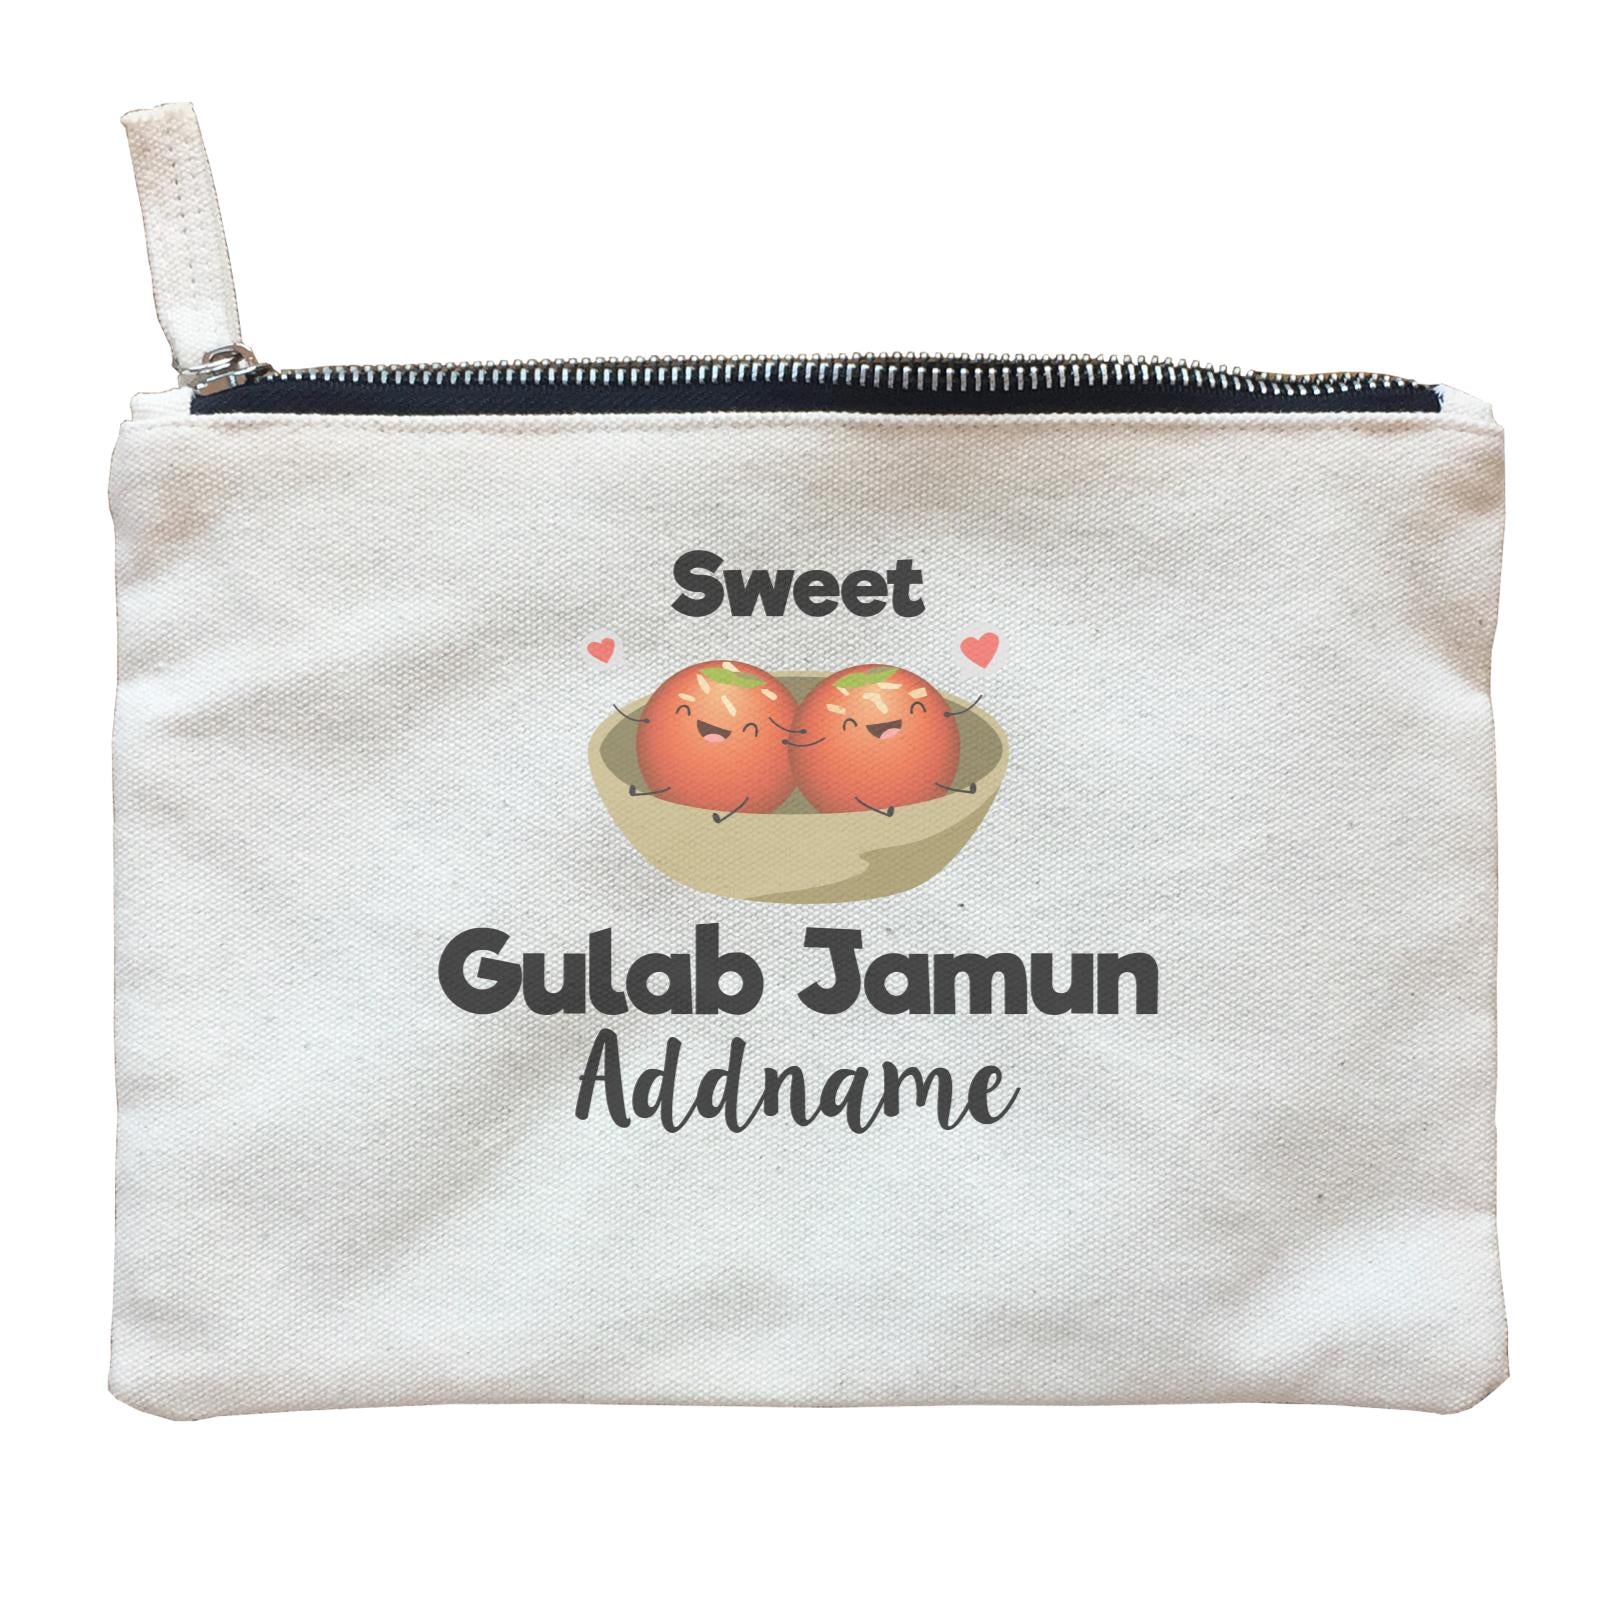 Sweet Gulab Jamun Addname Zipper Pouch